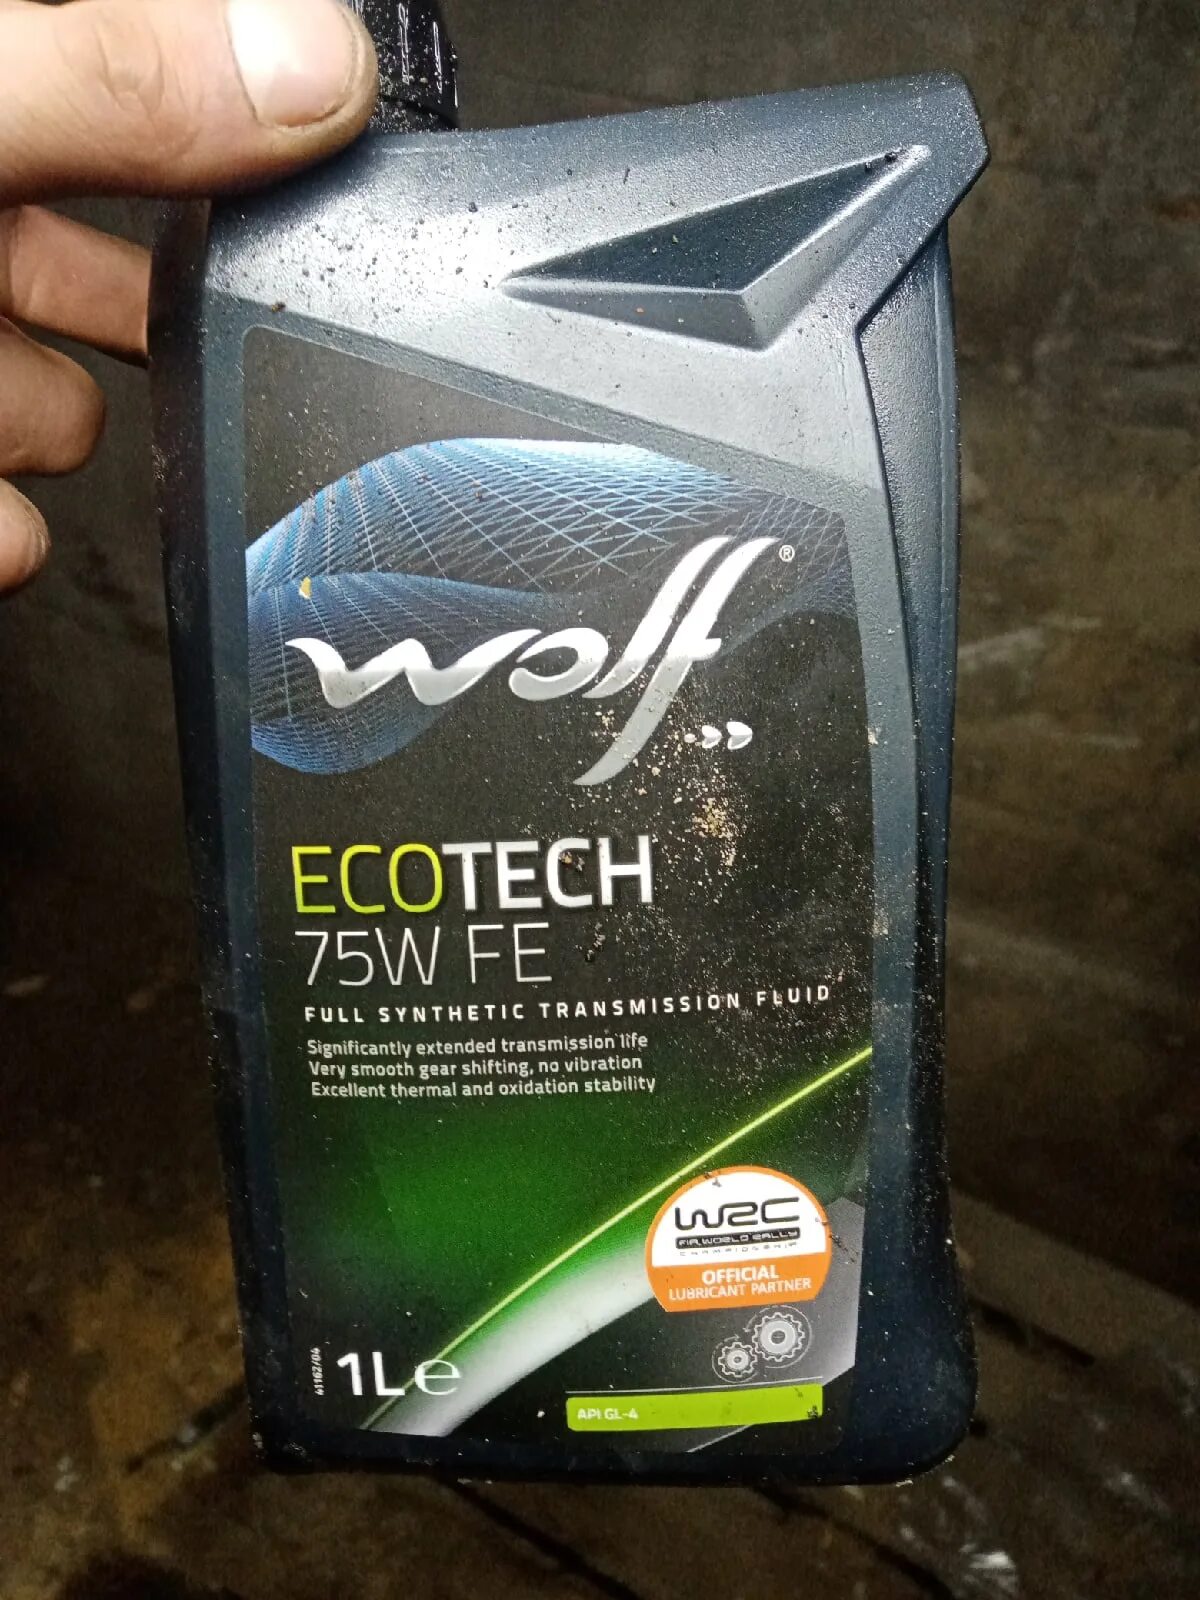 Wolf ECOTECH 5w-30. ECOTECH 75w Premium. Wolf ECOTECH 75w Premium. Wolf 75w Fe.